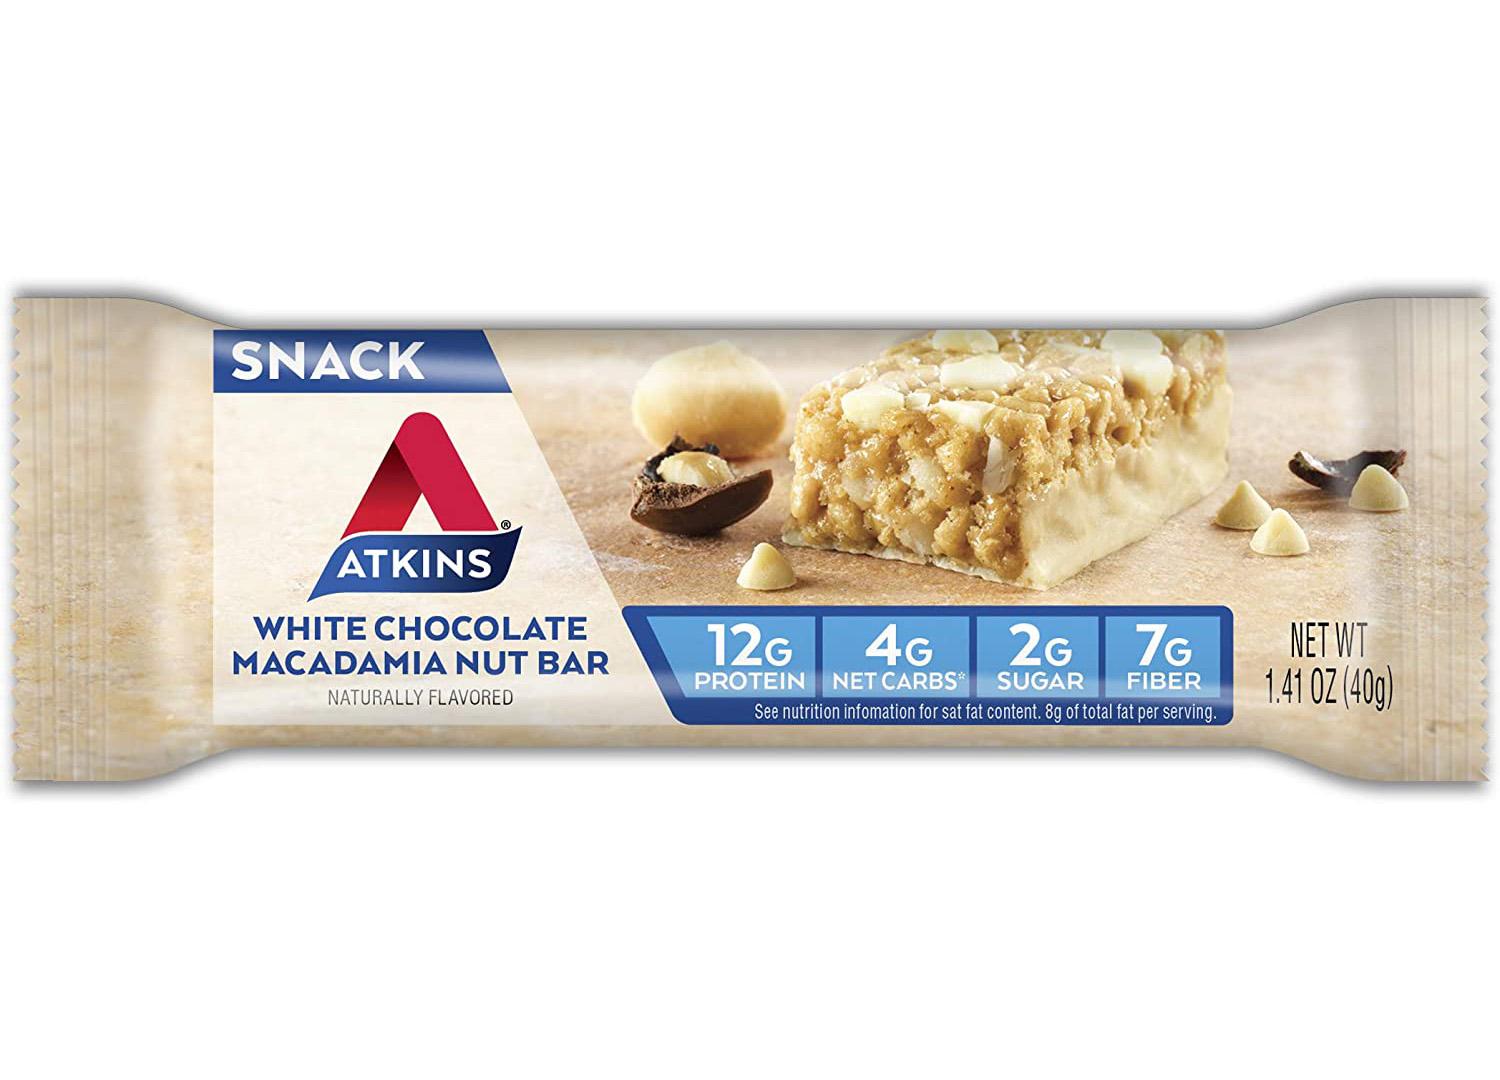 30 Atkins White Chocolate Macadamia Snack Bars for $22.43